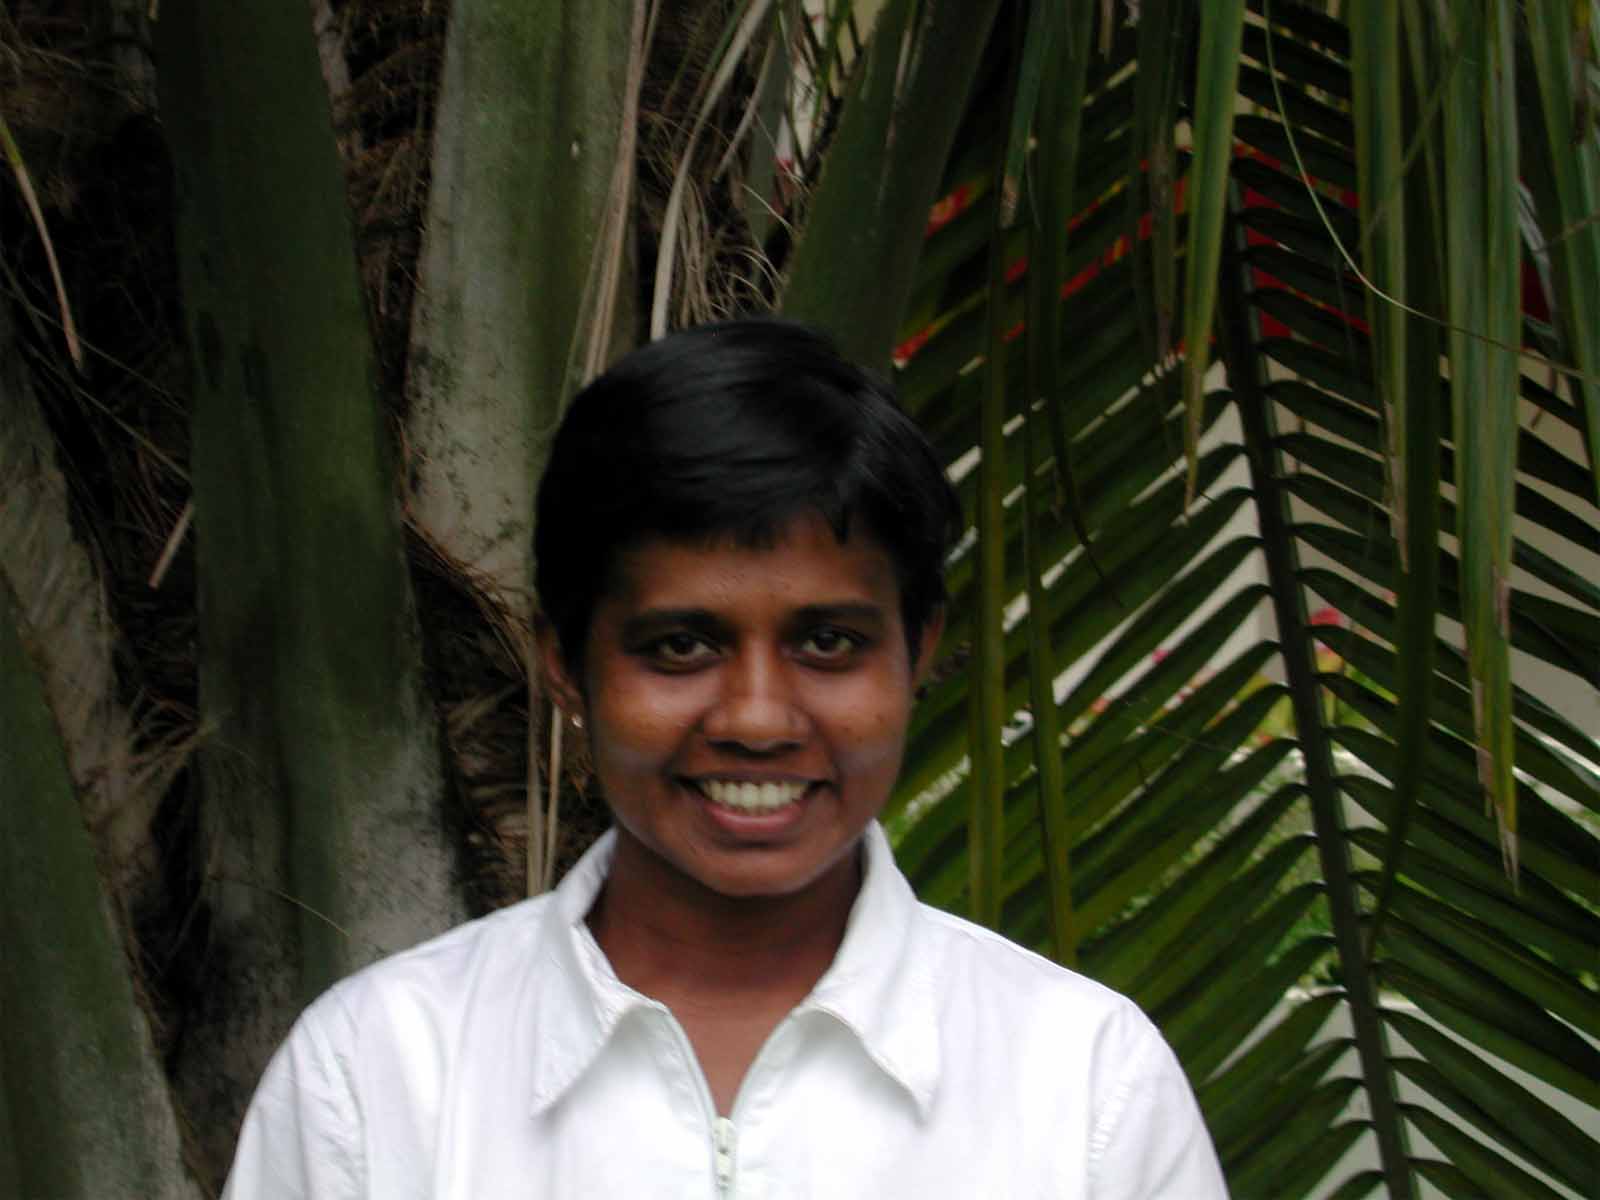 Kaushalya